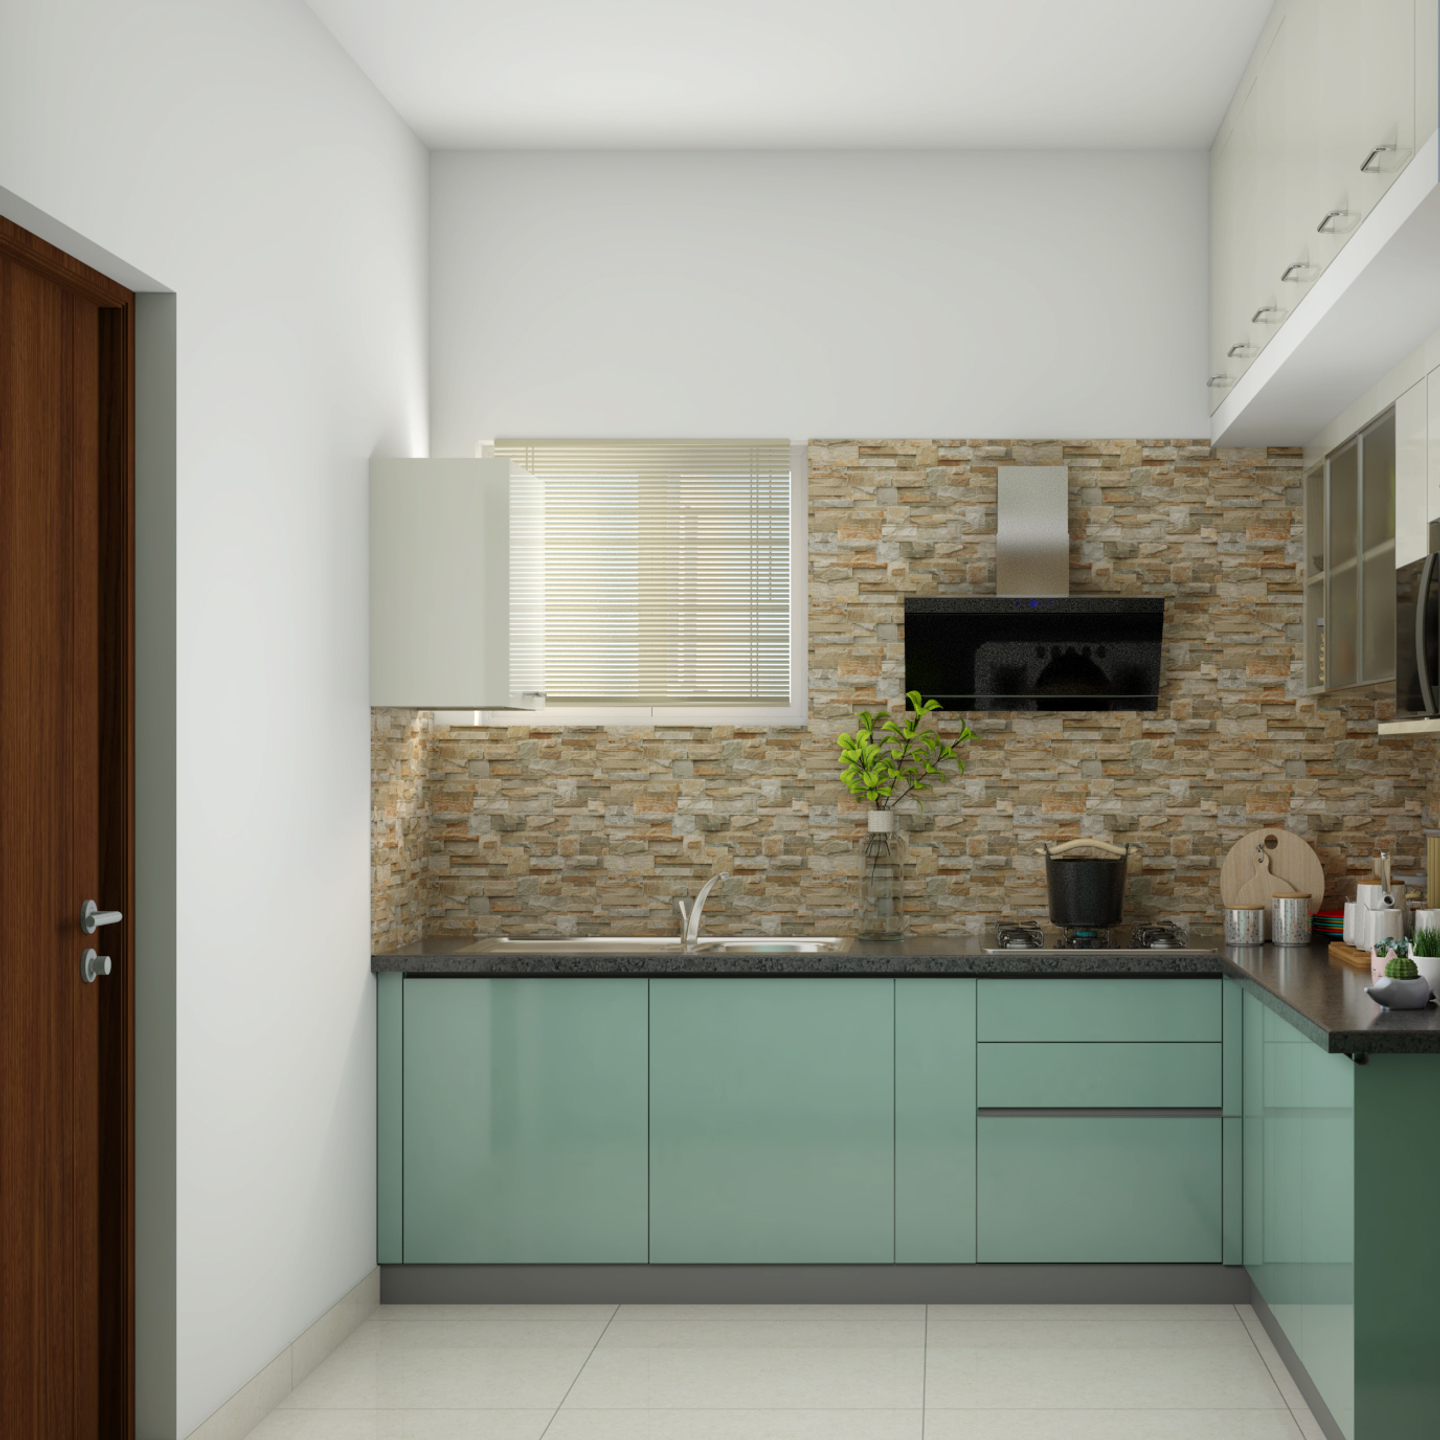 Spacious Kitchen Design For Rental Homes - Livspace